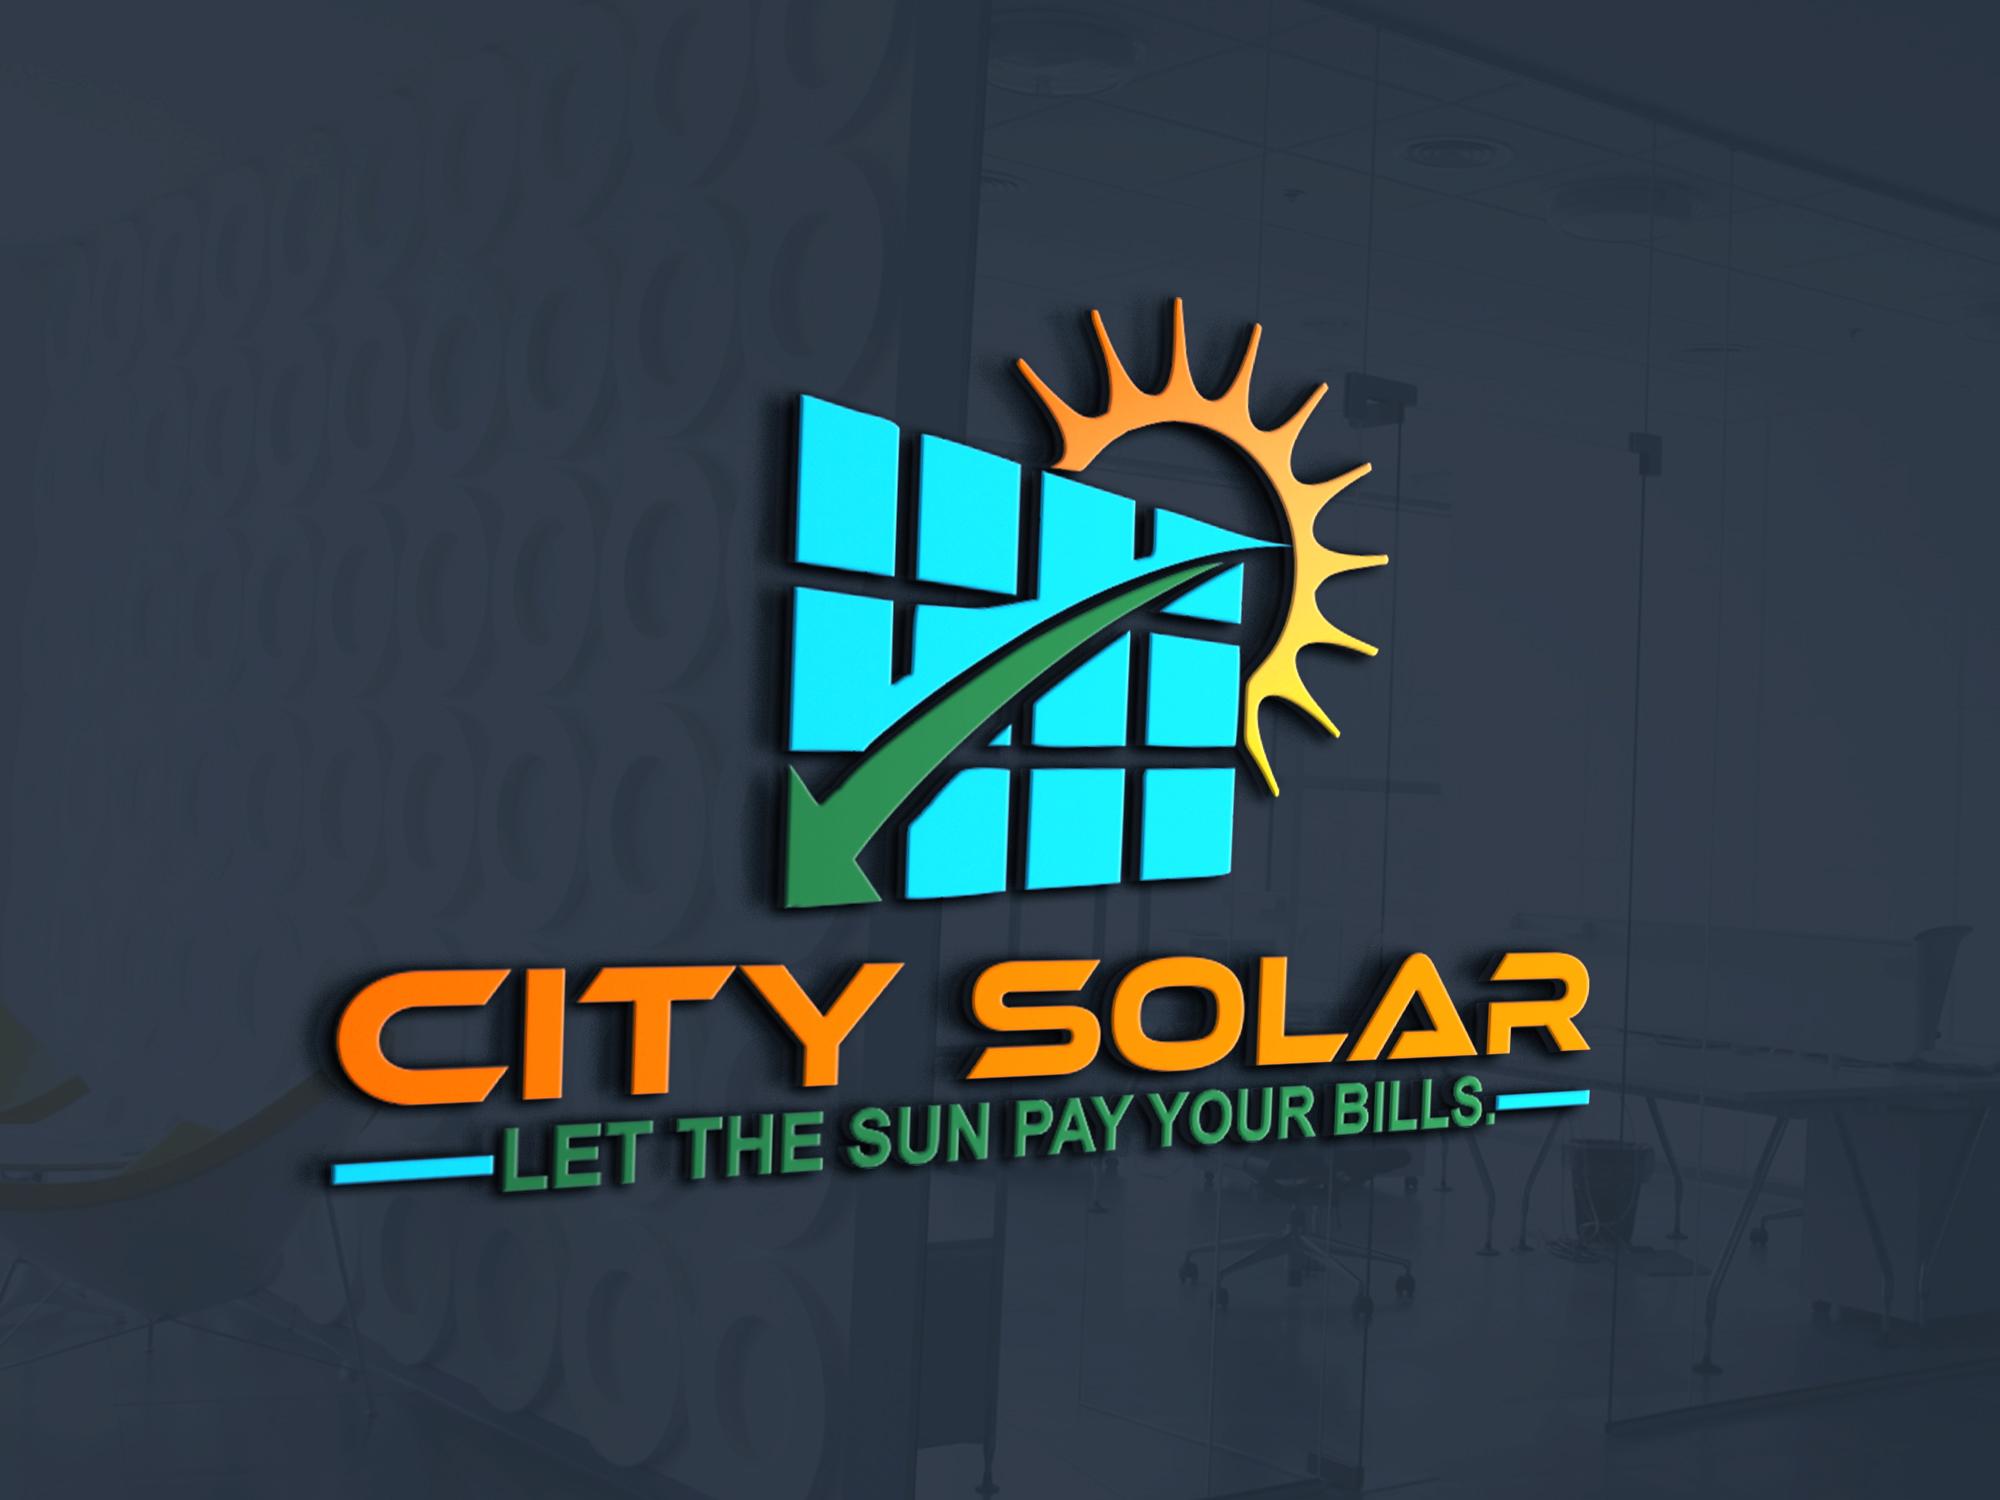 CITY SOLAR ENERGY